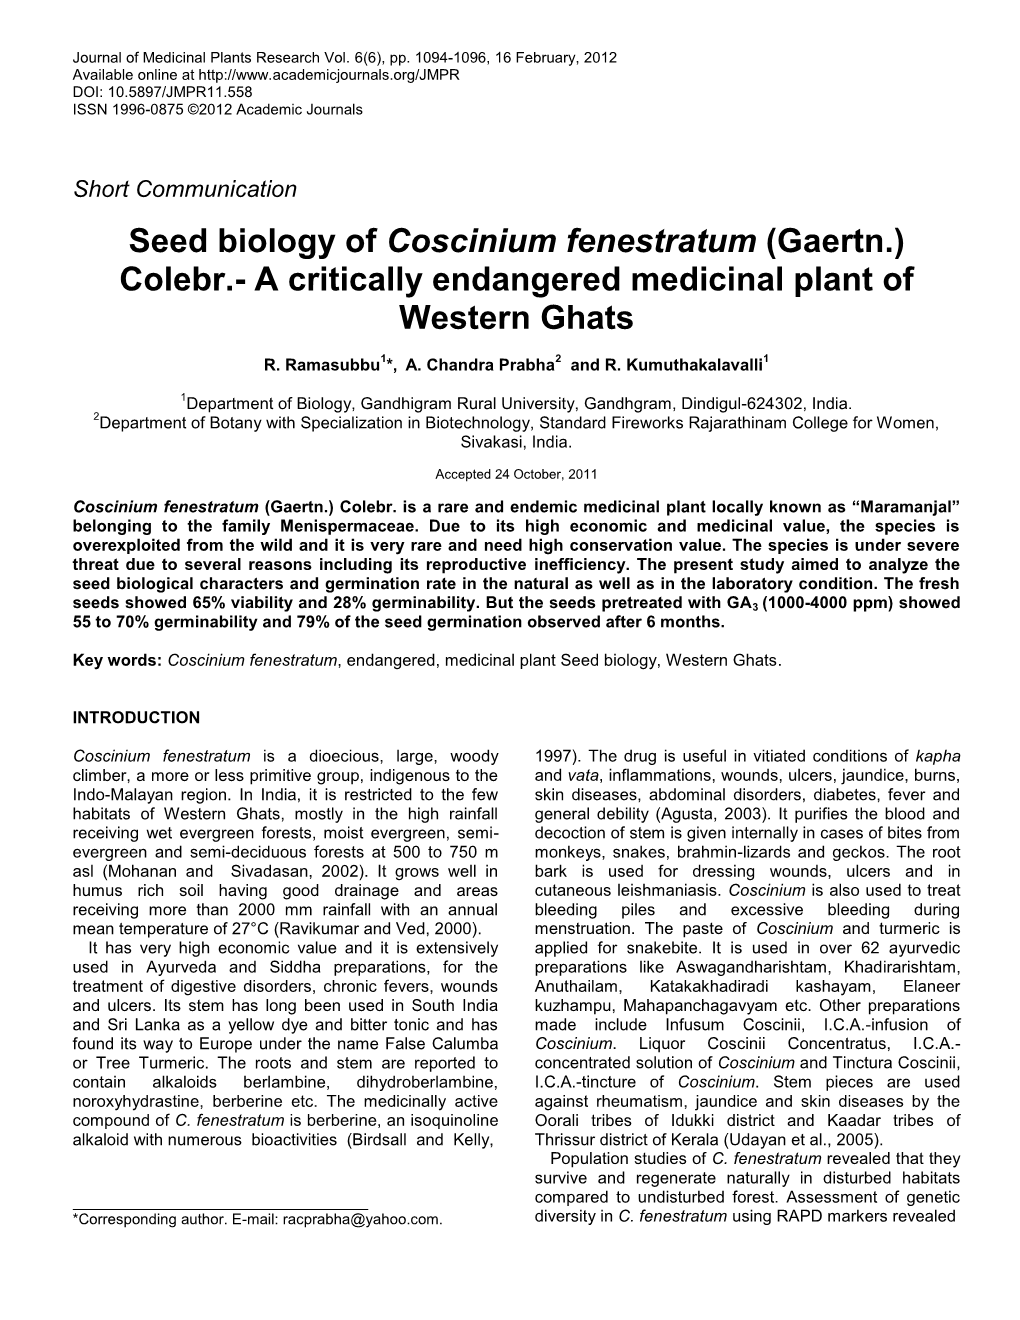 Seed Biology of Coscinium Fenestratum (Gaertn.) Colebr.- a Critically Endangered Medicinal Plant of Western Ghats